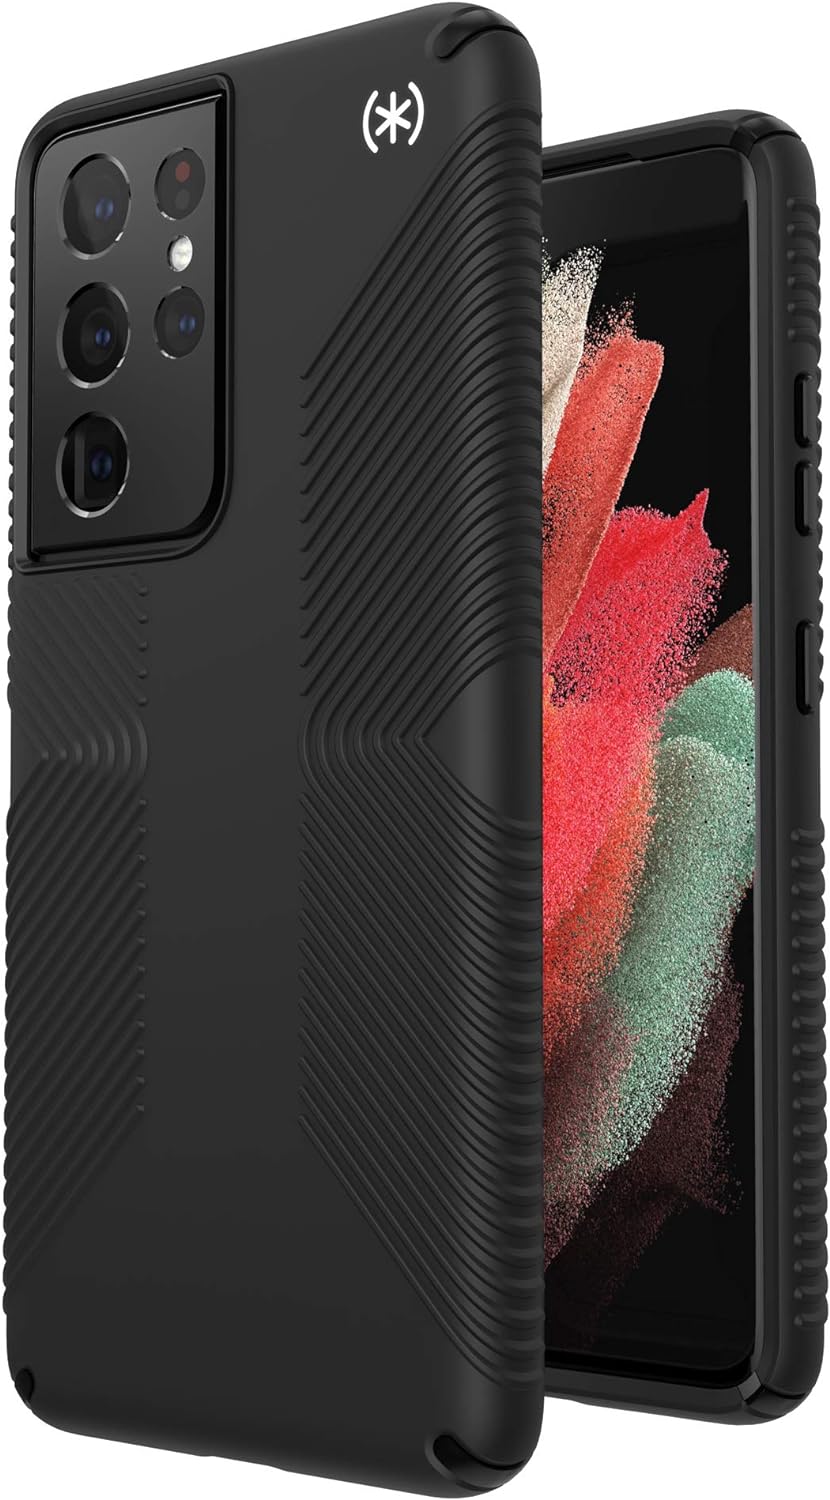 Speck Presidio2 Grip Samsung Galaxy S21 Ultra Case, 13ft Drop Protection - Black/White